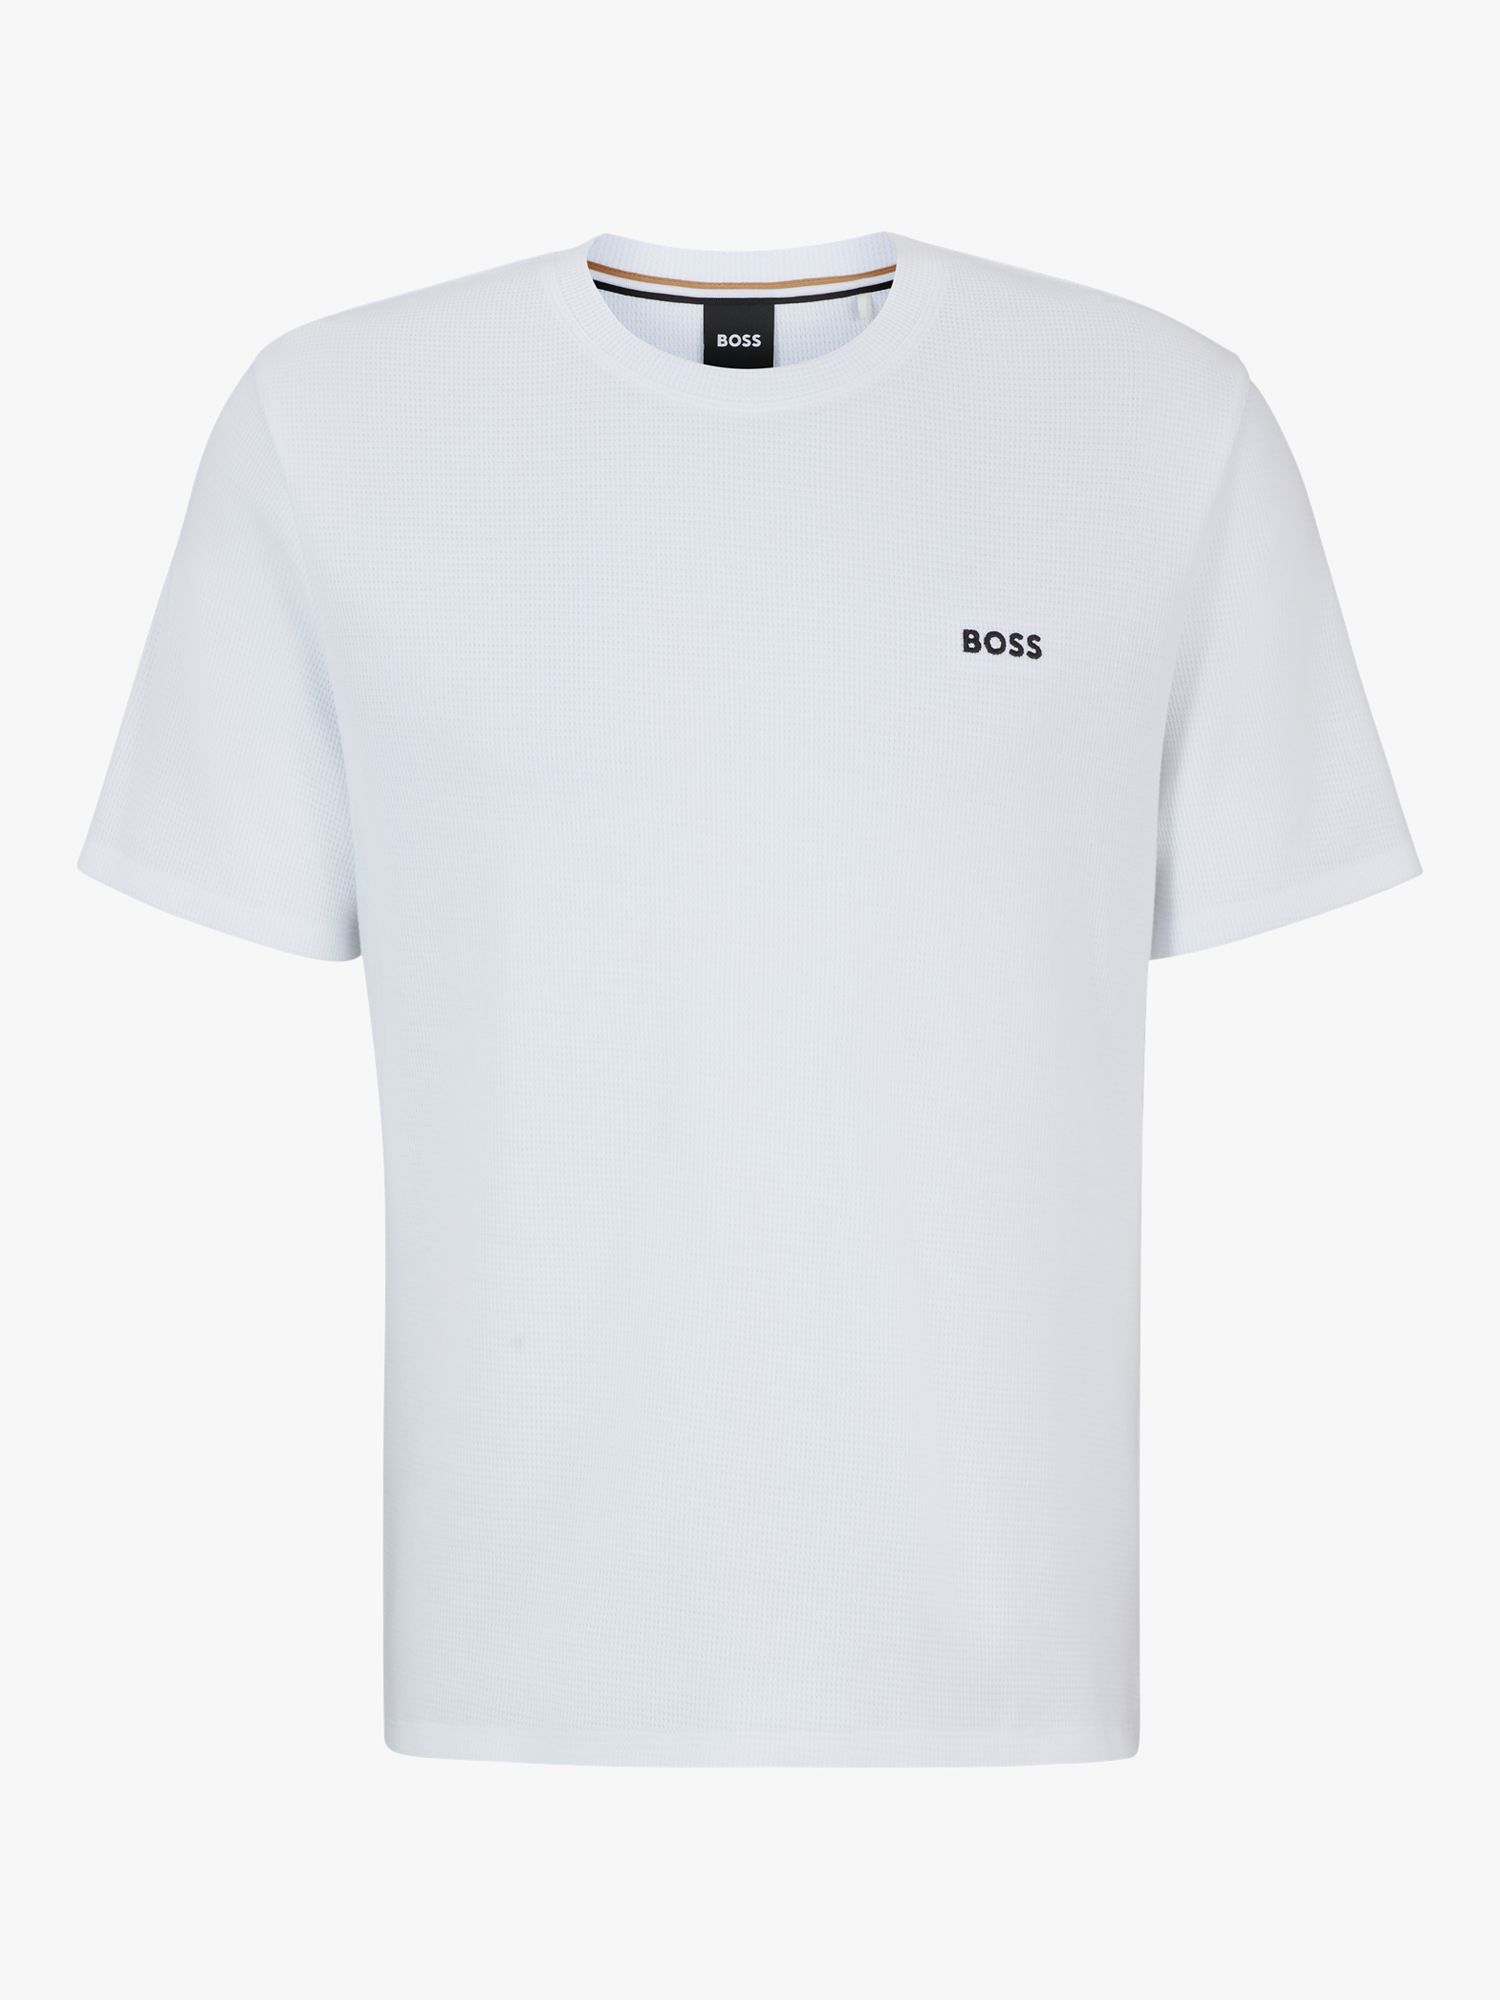 BOSS Waffle Short Sleeve T-Shirt, Open White, L